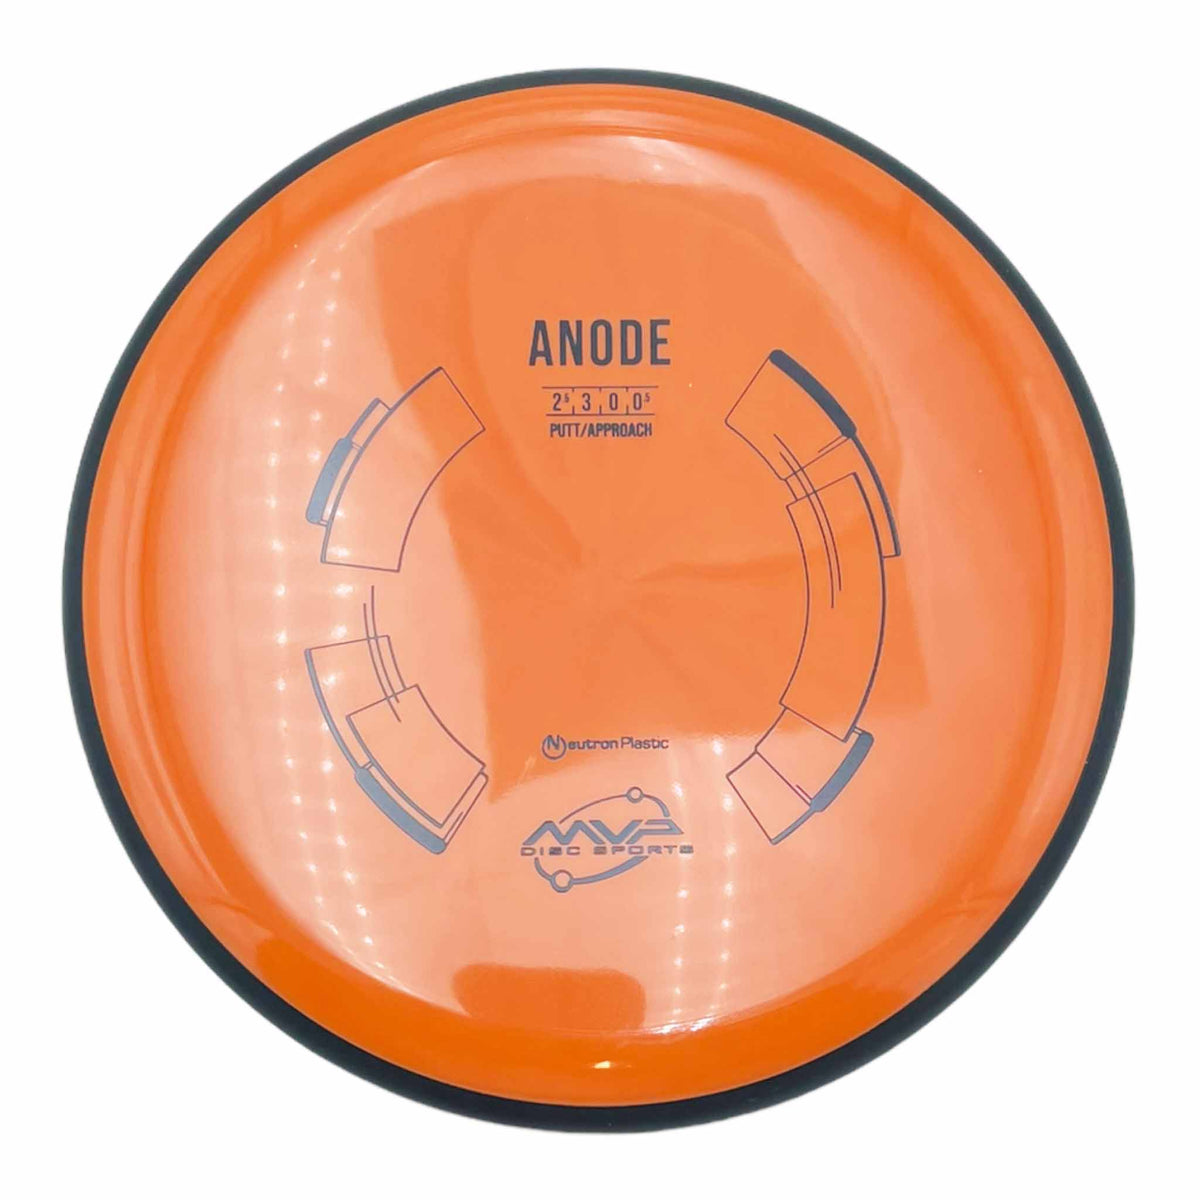 MVP Disc Sports Neutron Anode putter and approach - Orange